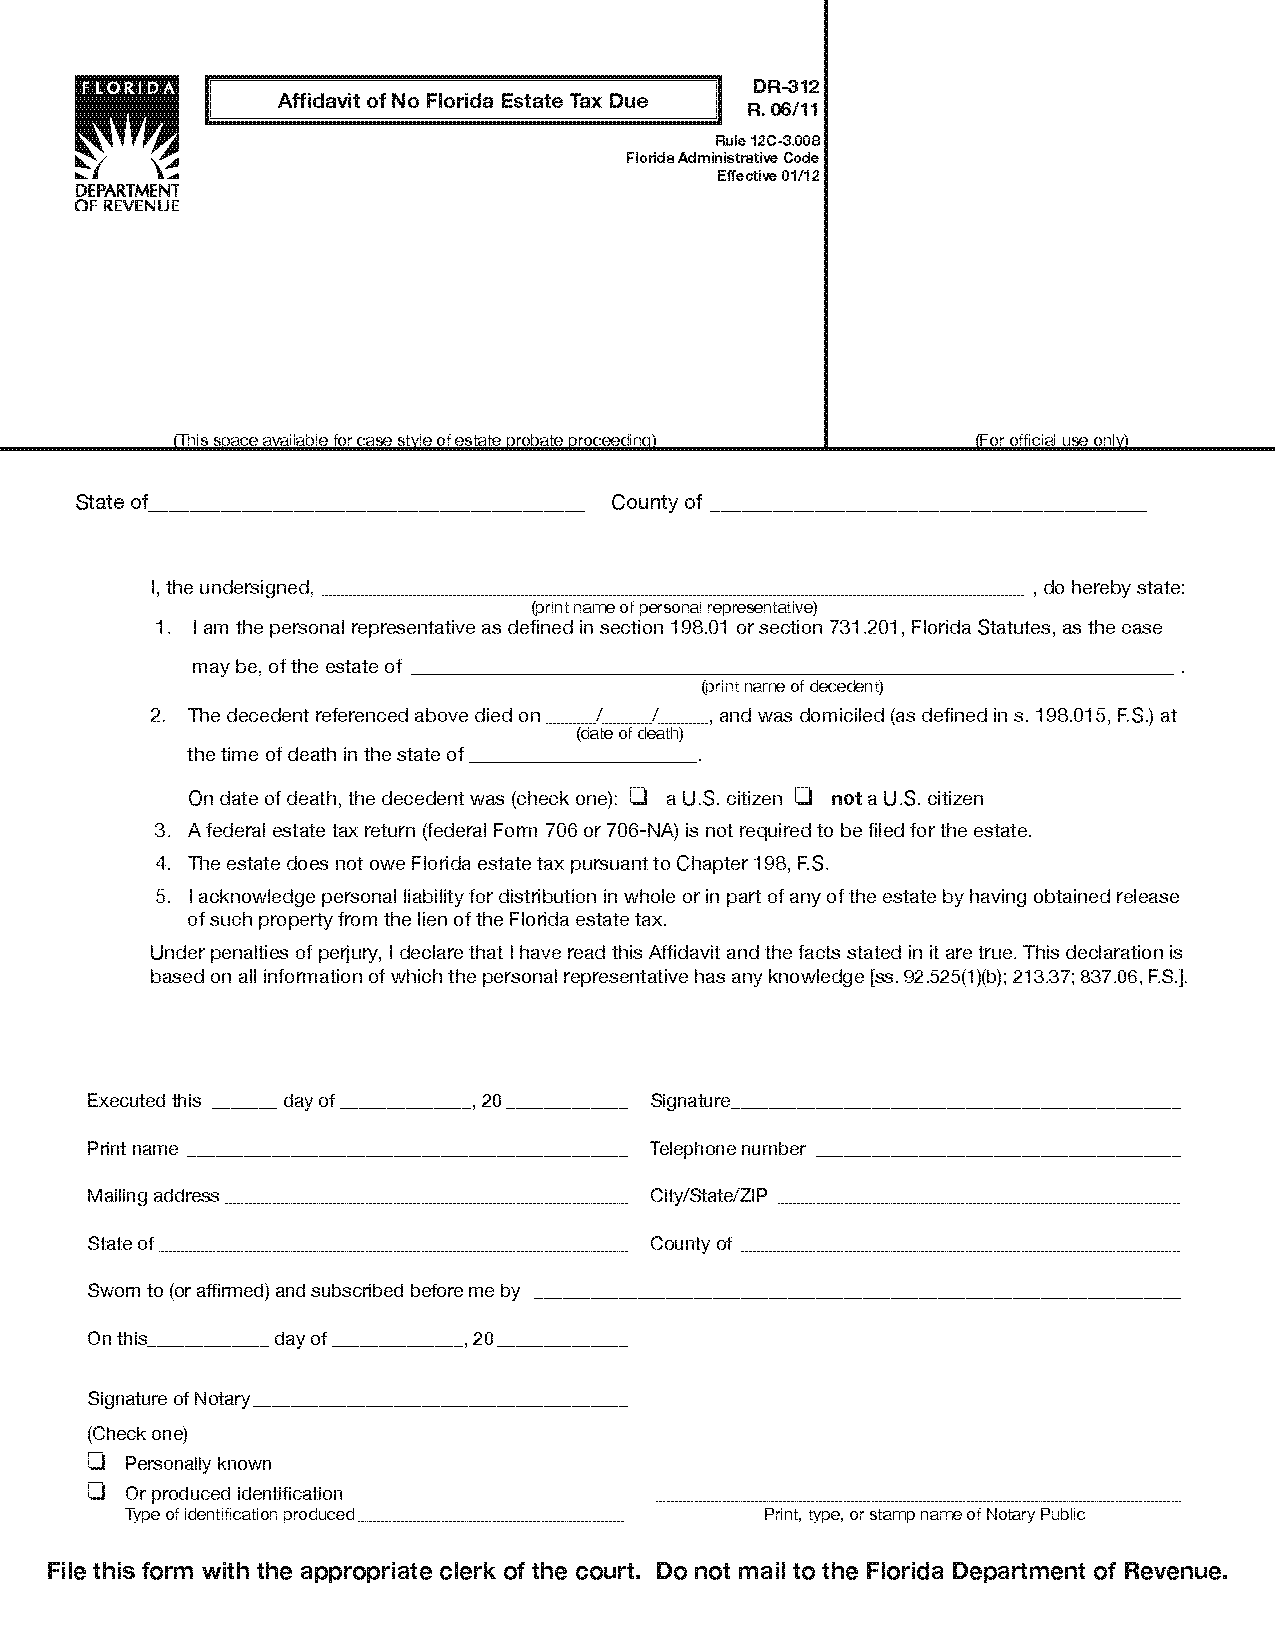 Form DR 312 Affidavit Of No Florida Estate Tax Due R 06 11